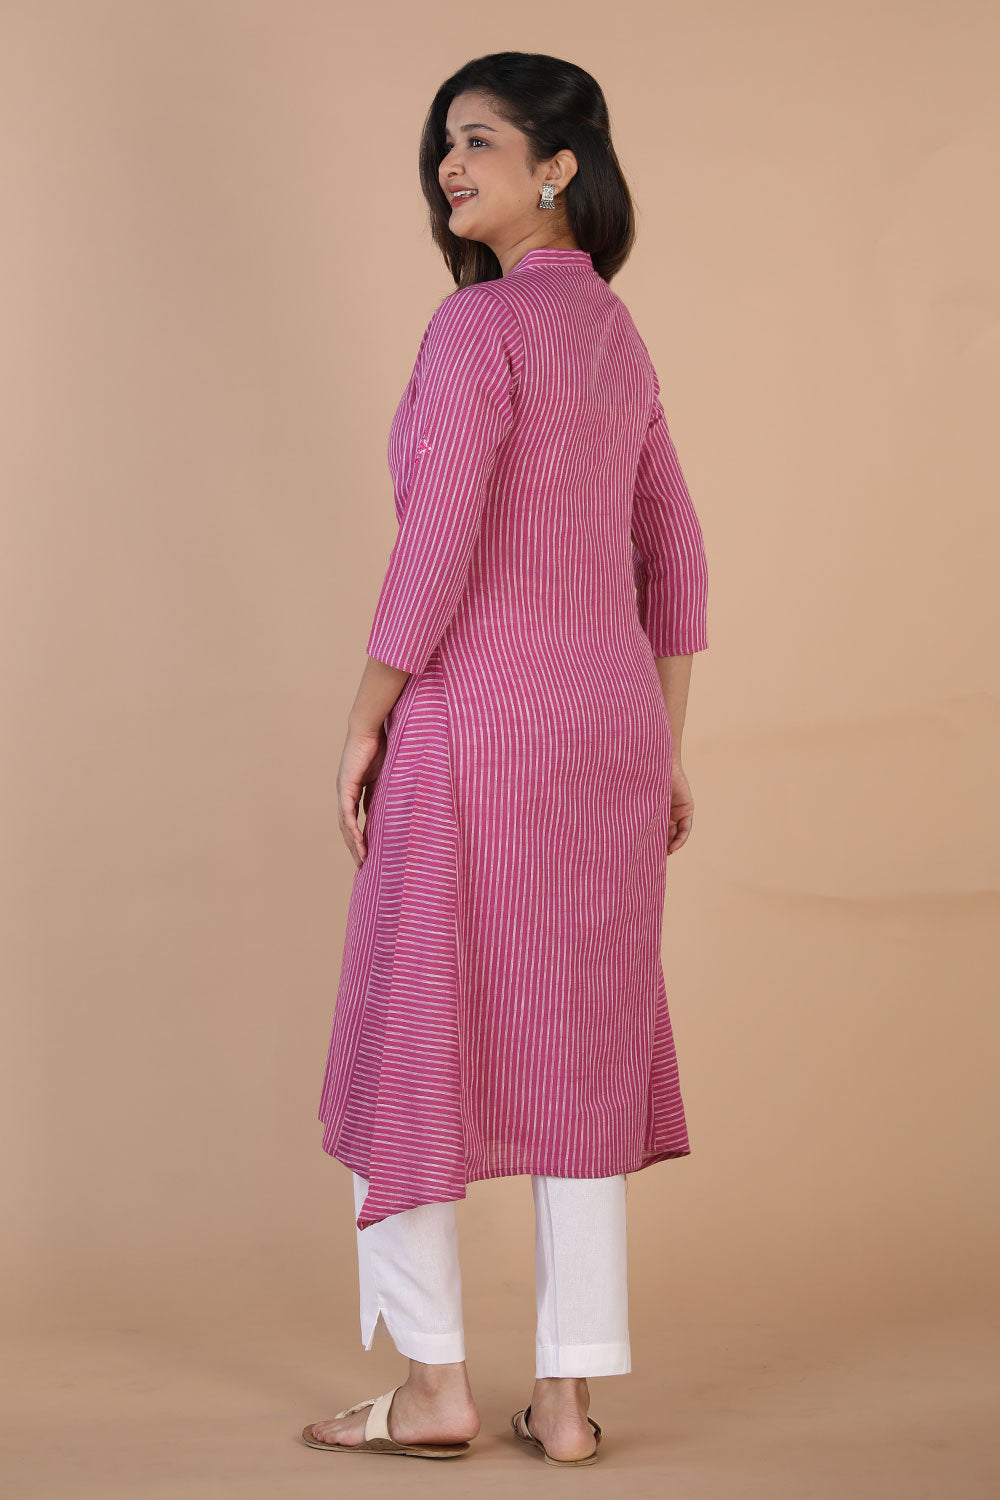 Buy VIMBALI Cotton Striped/Lining Design Kurti for Girls and Women